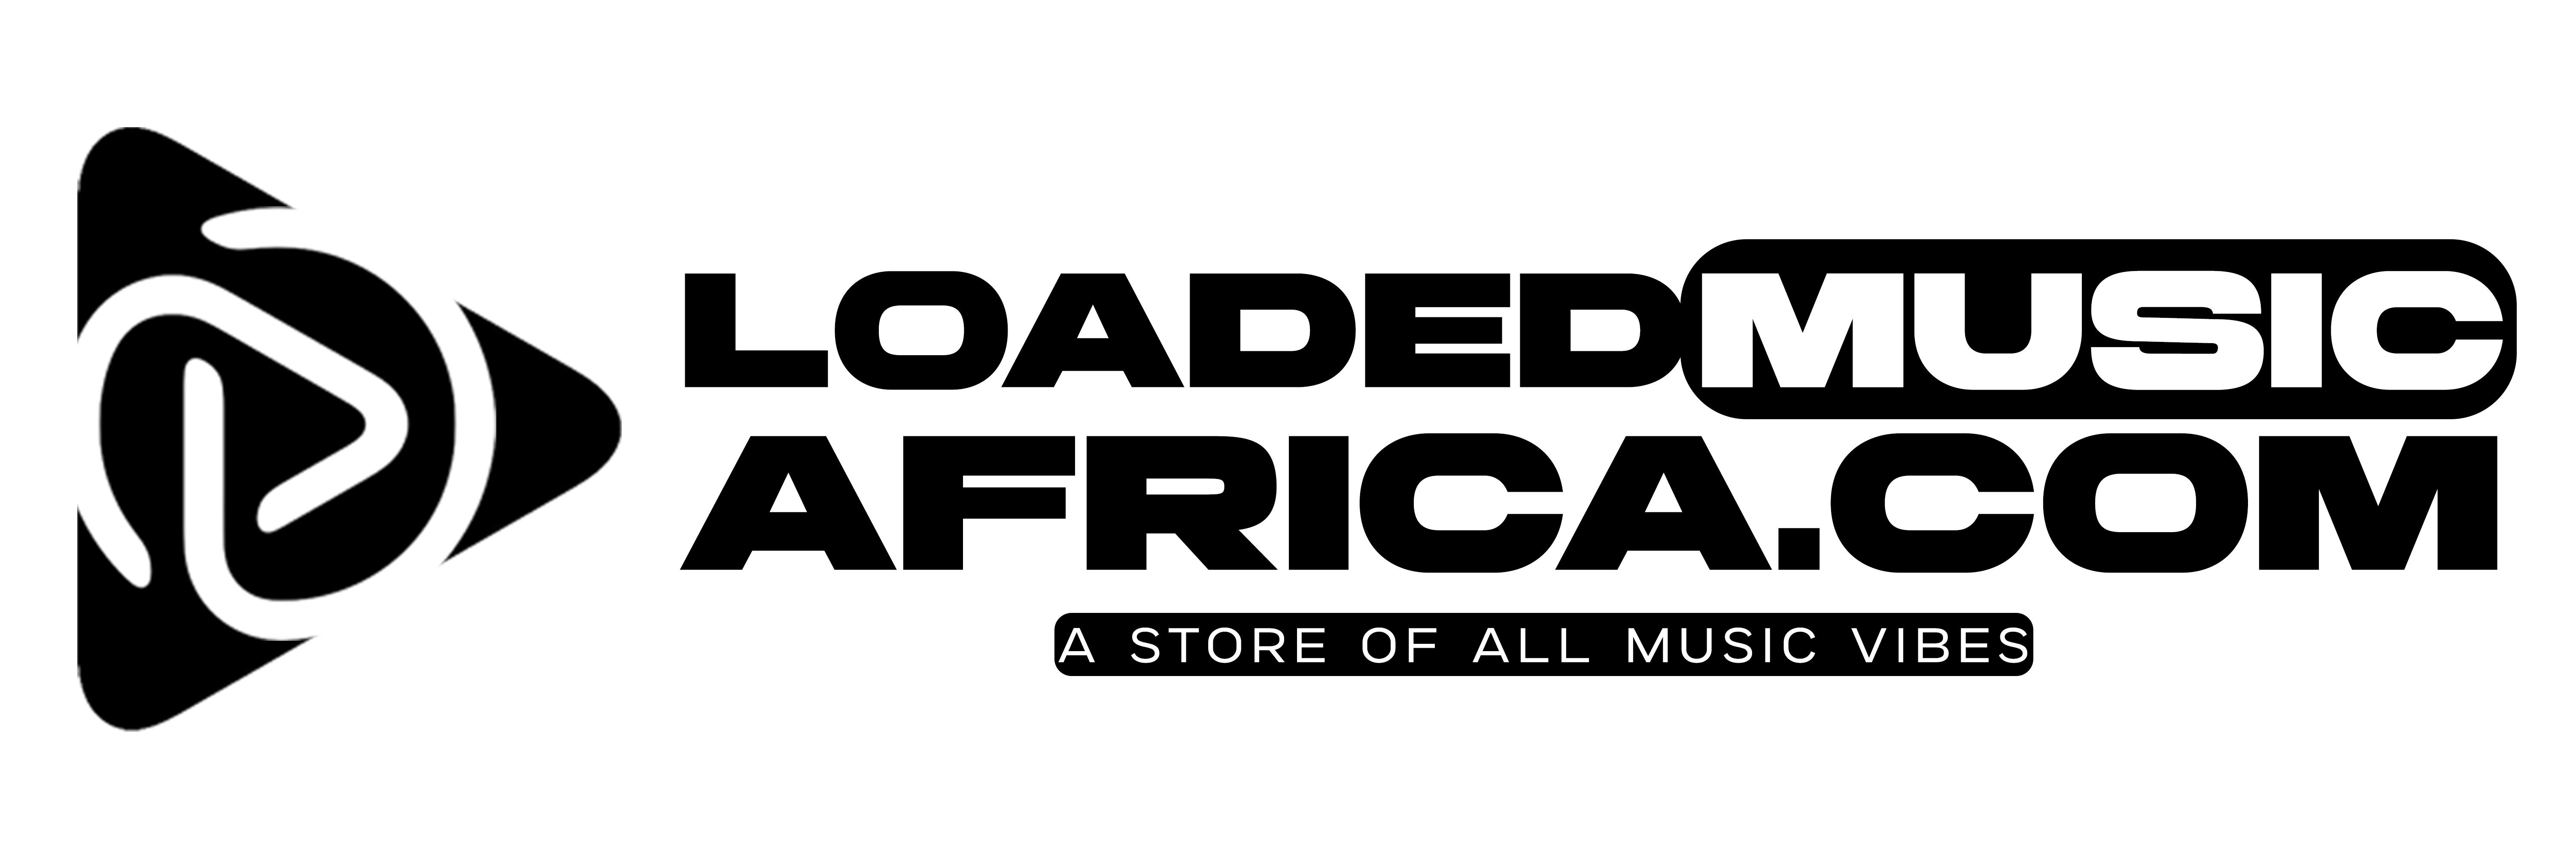 Loadedmusicafrica